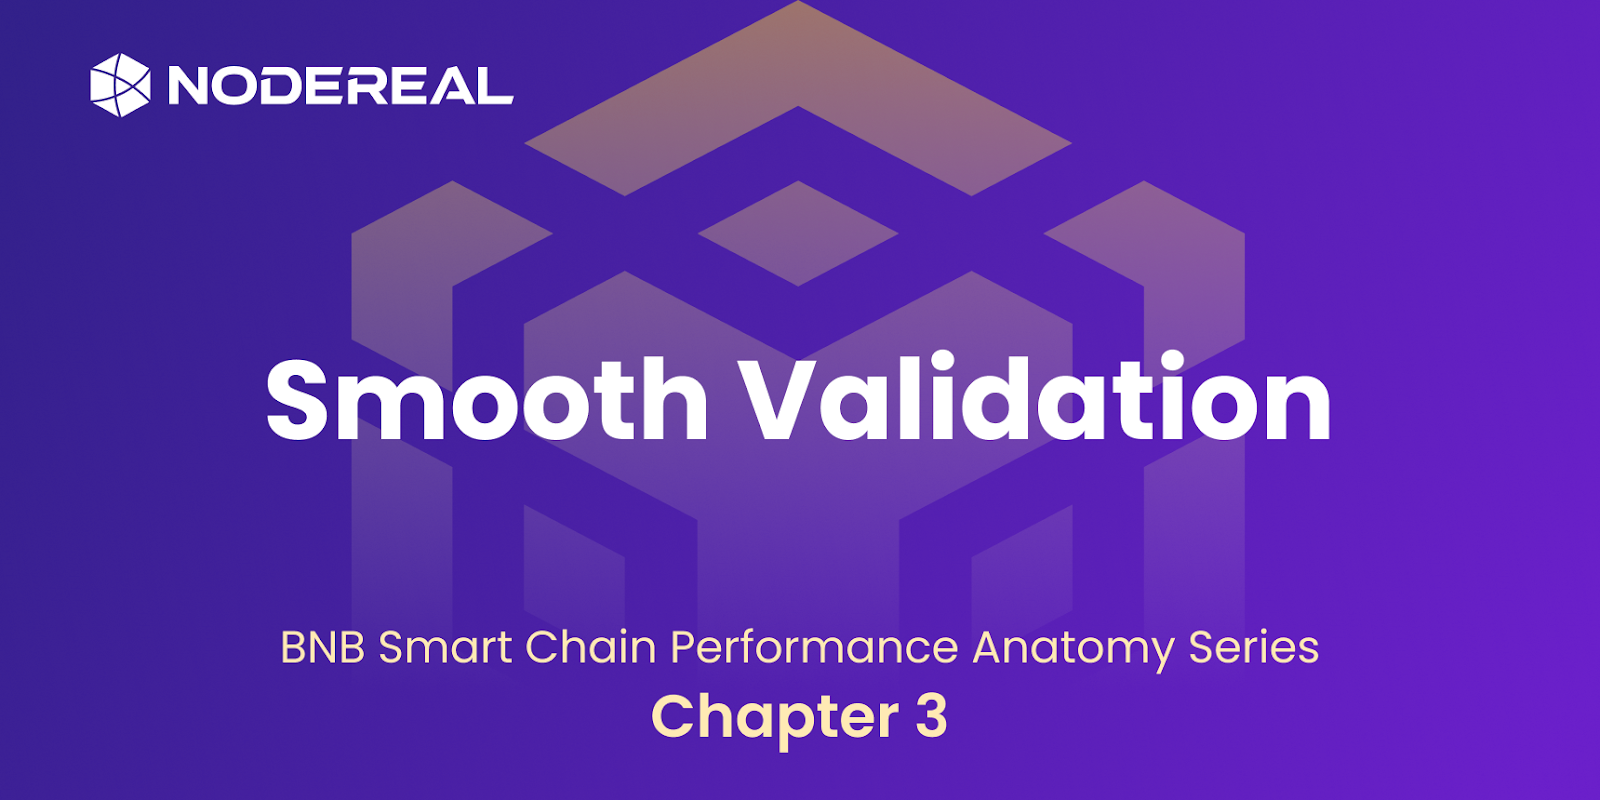 BNB Smart Chain Performance Anatomy Series: Chapter III. Smooth Validation